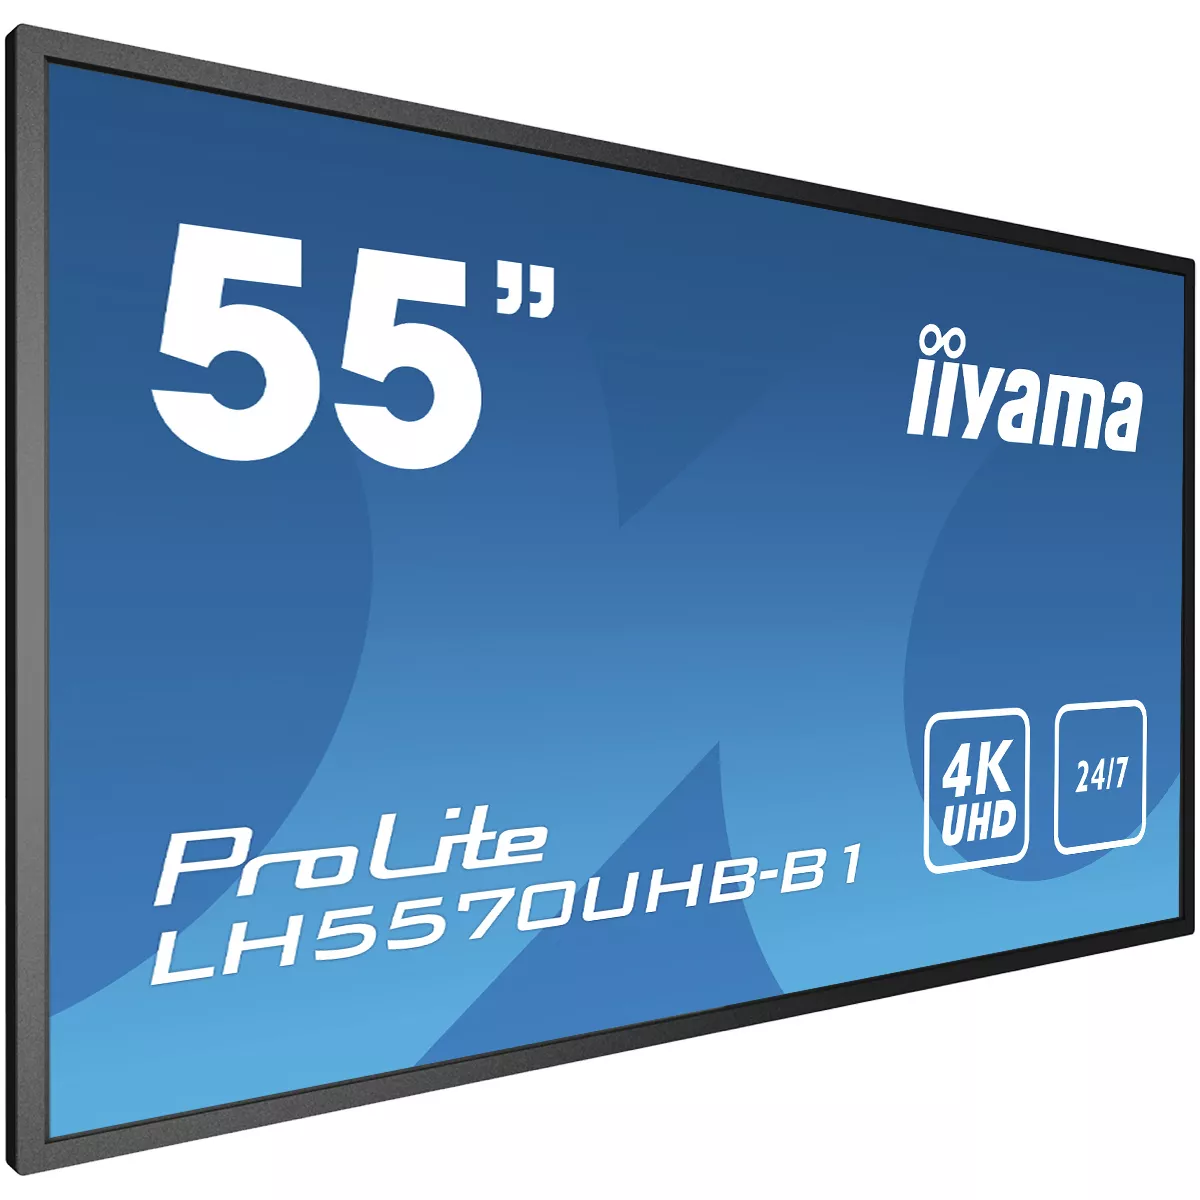 Vente iiyama LH5570UHB-B1 iiyama au meilleur prix - visuel 4